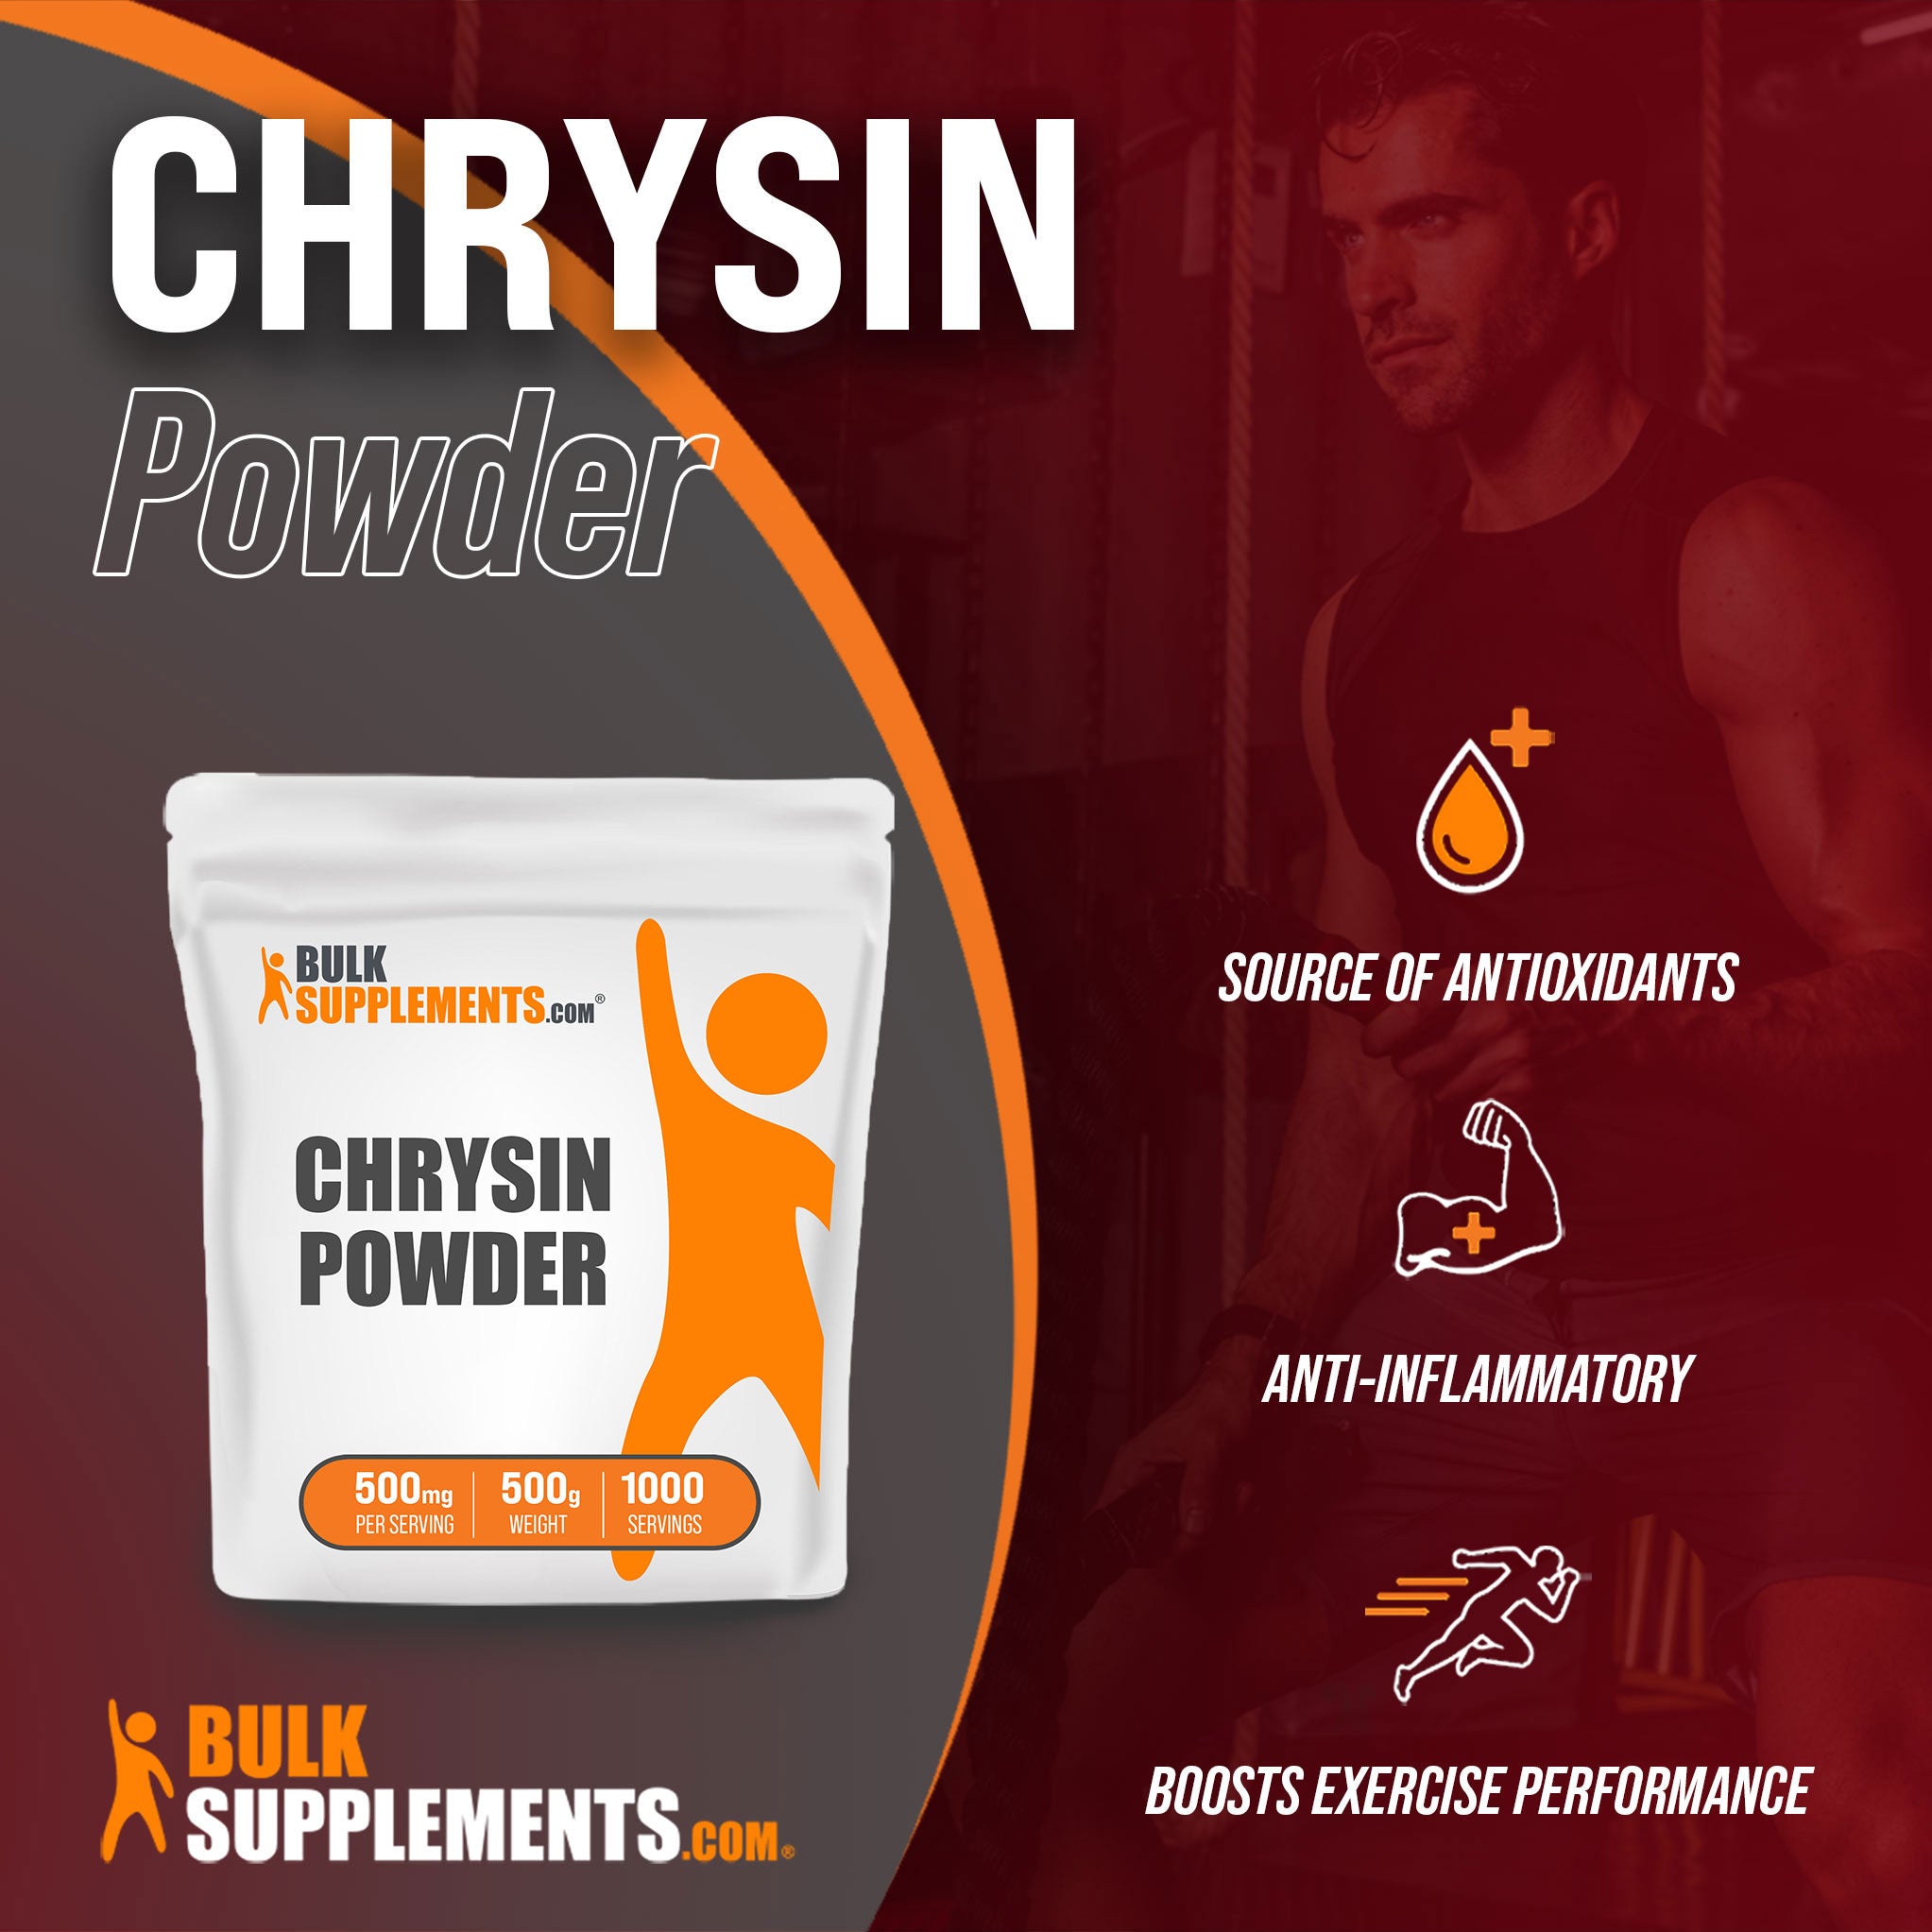 Benefits of Chrysin Powder; source of antioxidants, anti-inflammatory, boosts exercise performance